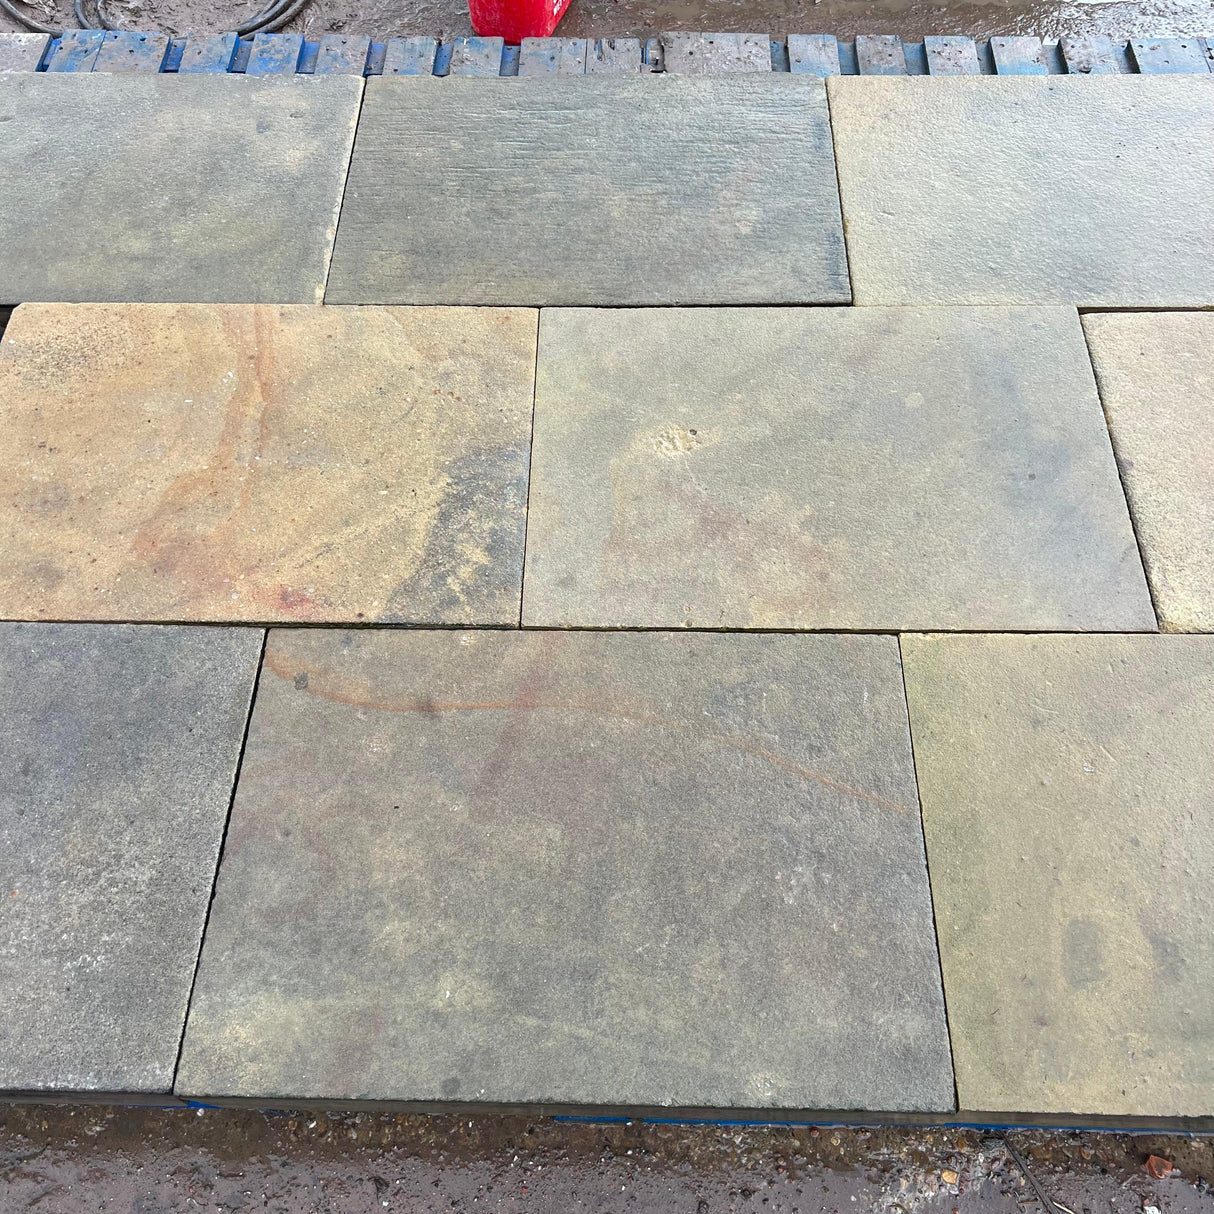 Reclaimed Sawn Yorkshire Sand Stone Paving Flag Stones - Reclaimed Brick Company